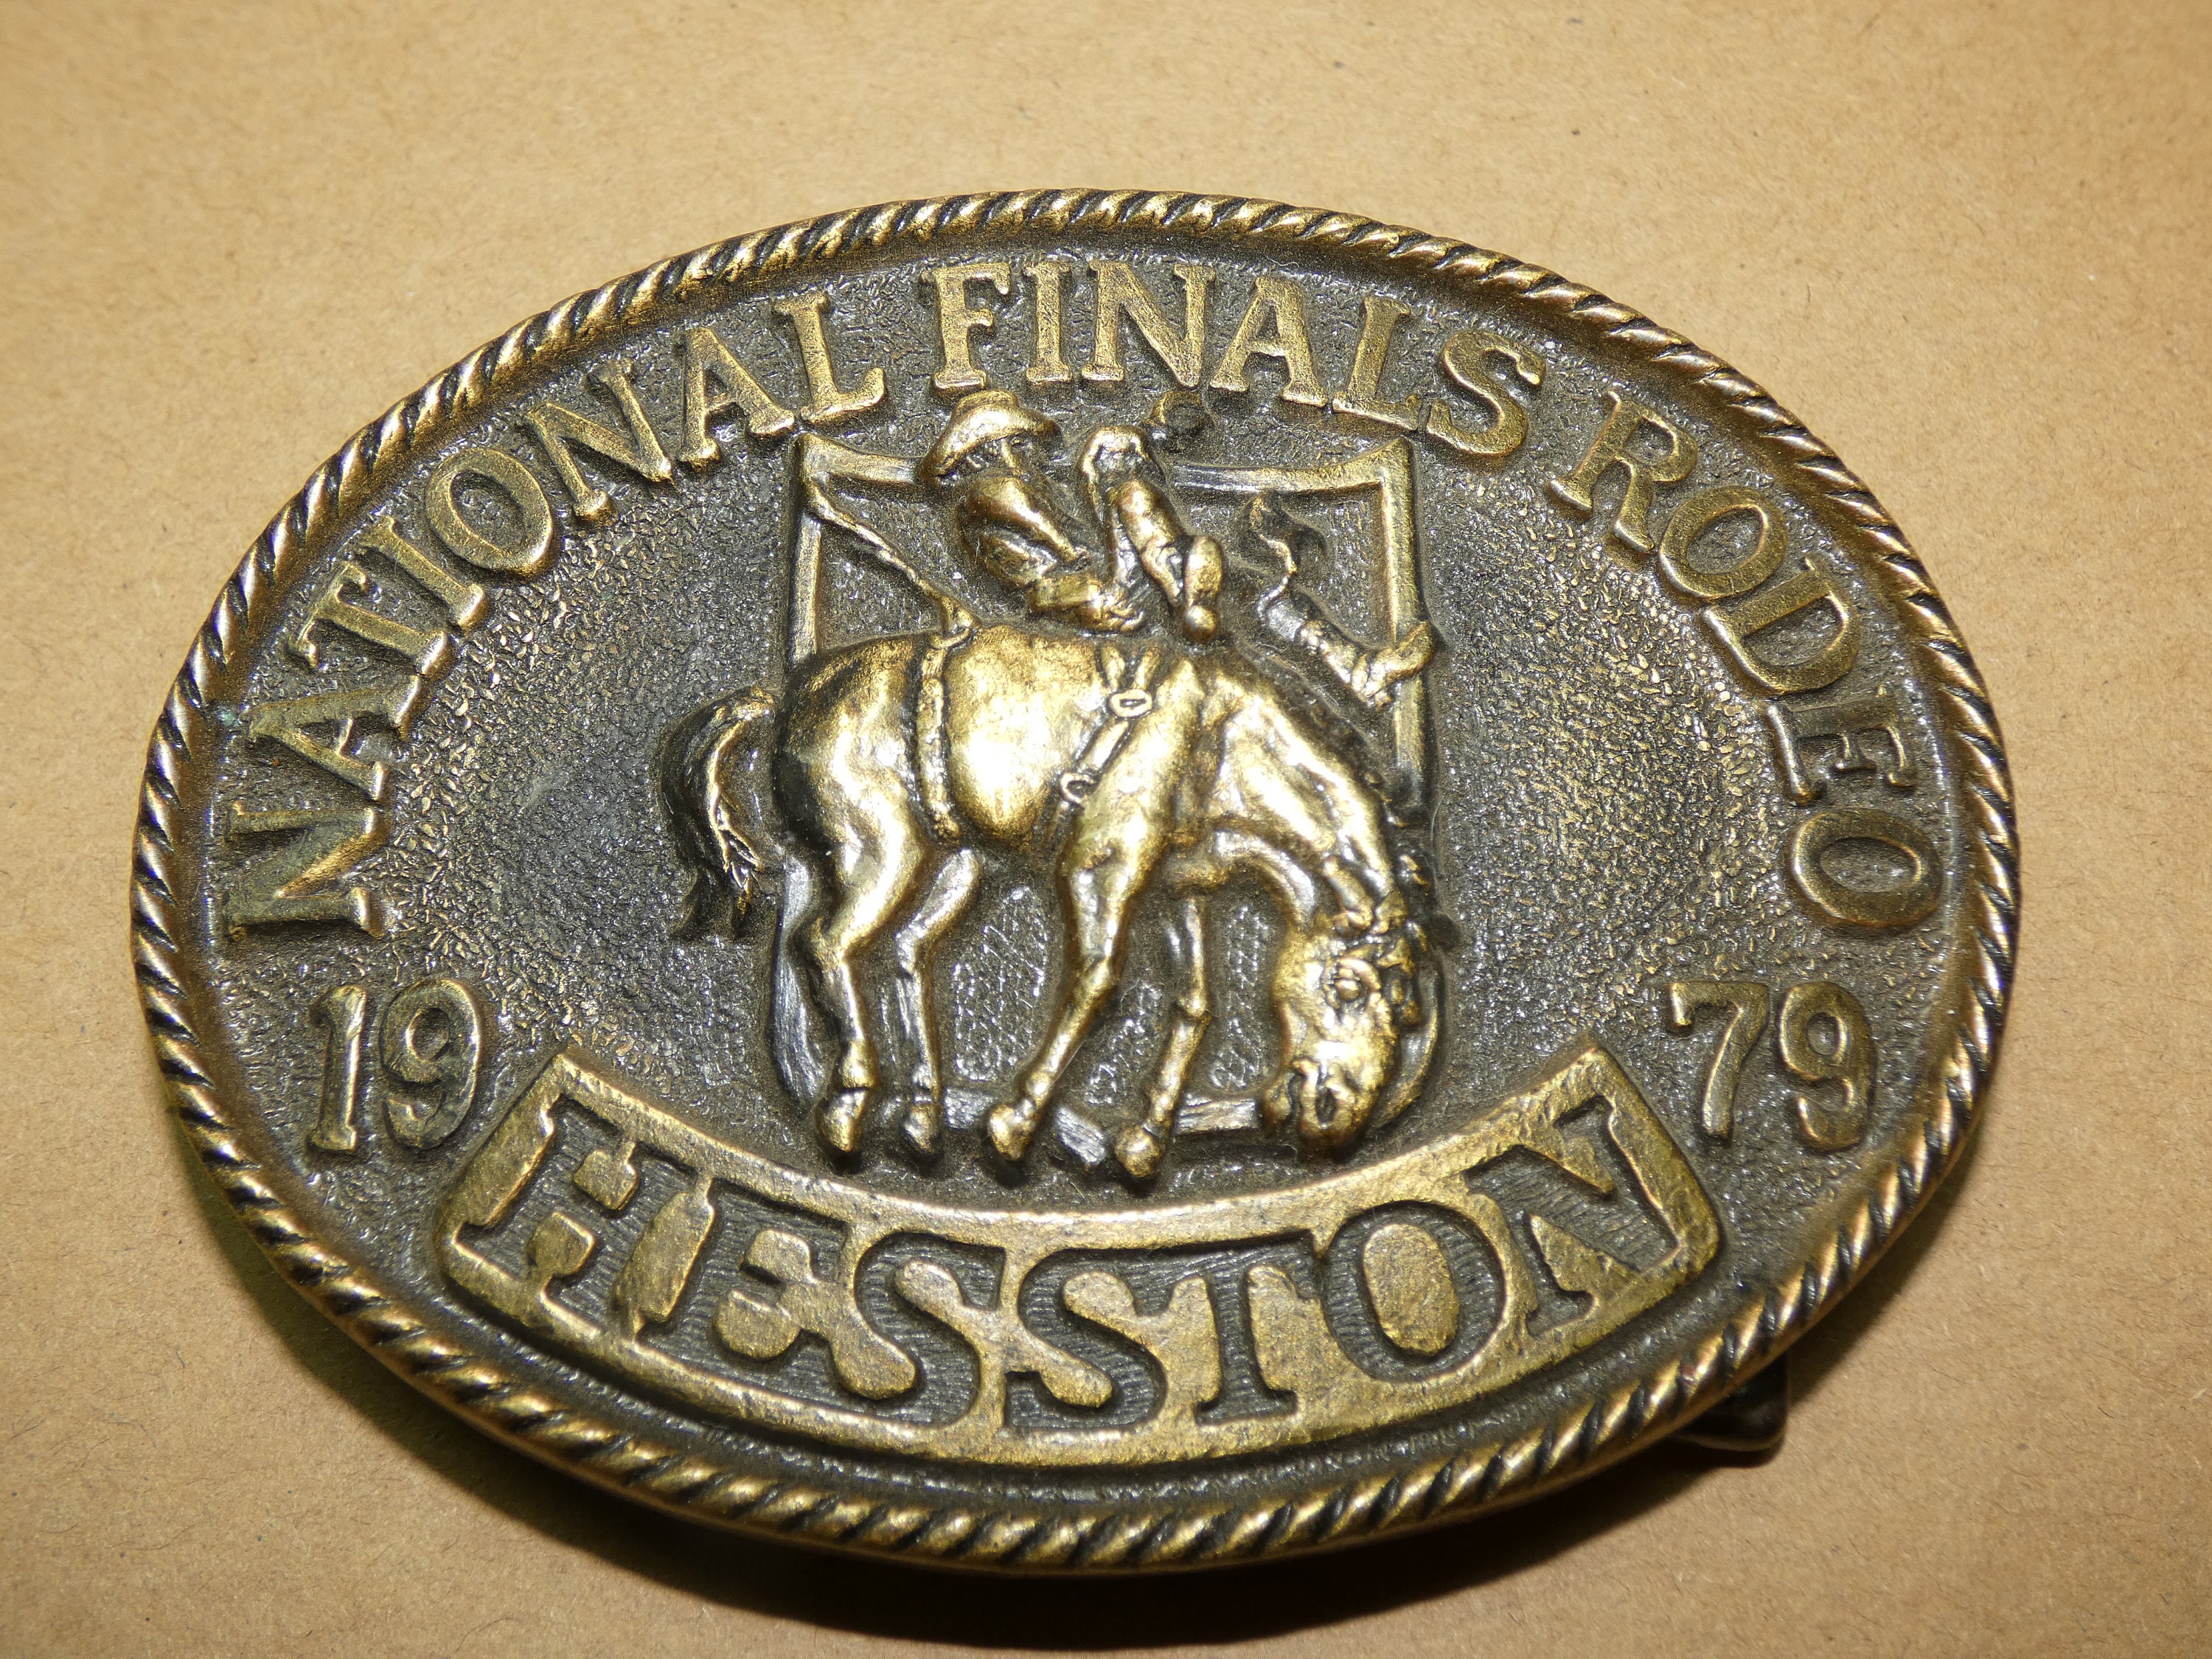 1989 Hesston National Finals Rodeo Women's Barrel Racing Belt Buckle FREE SHIP 